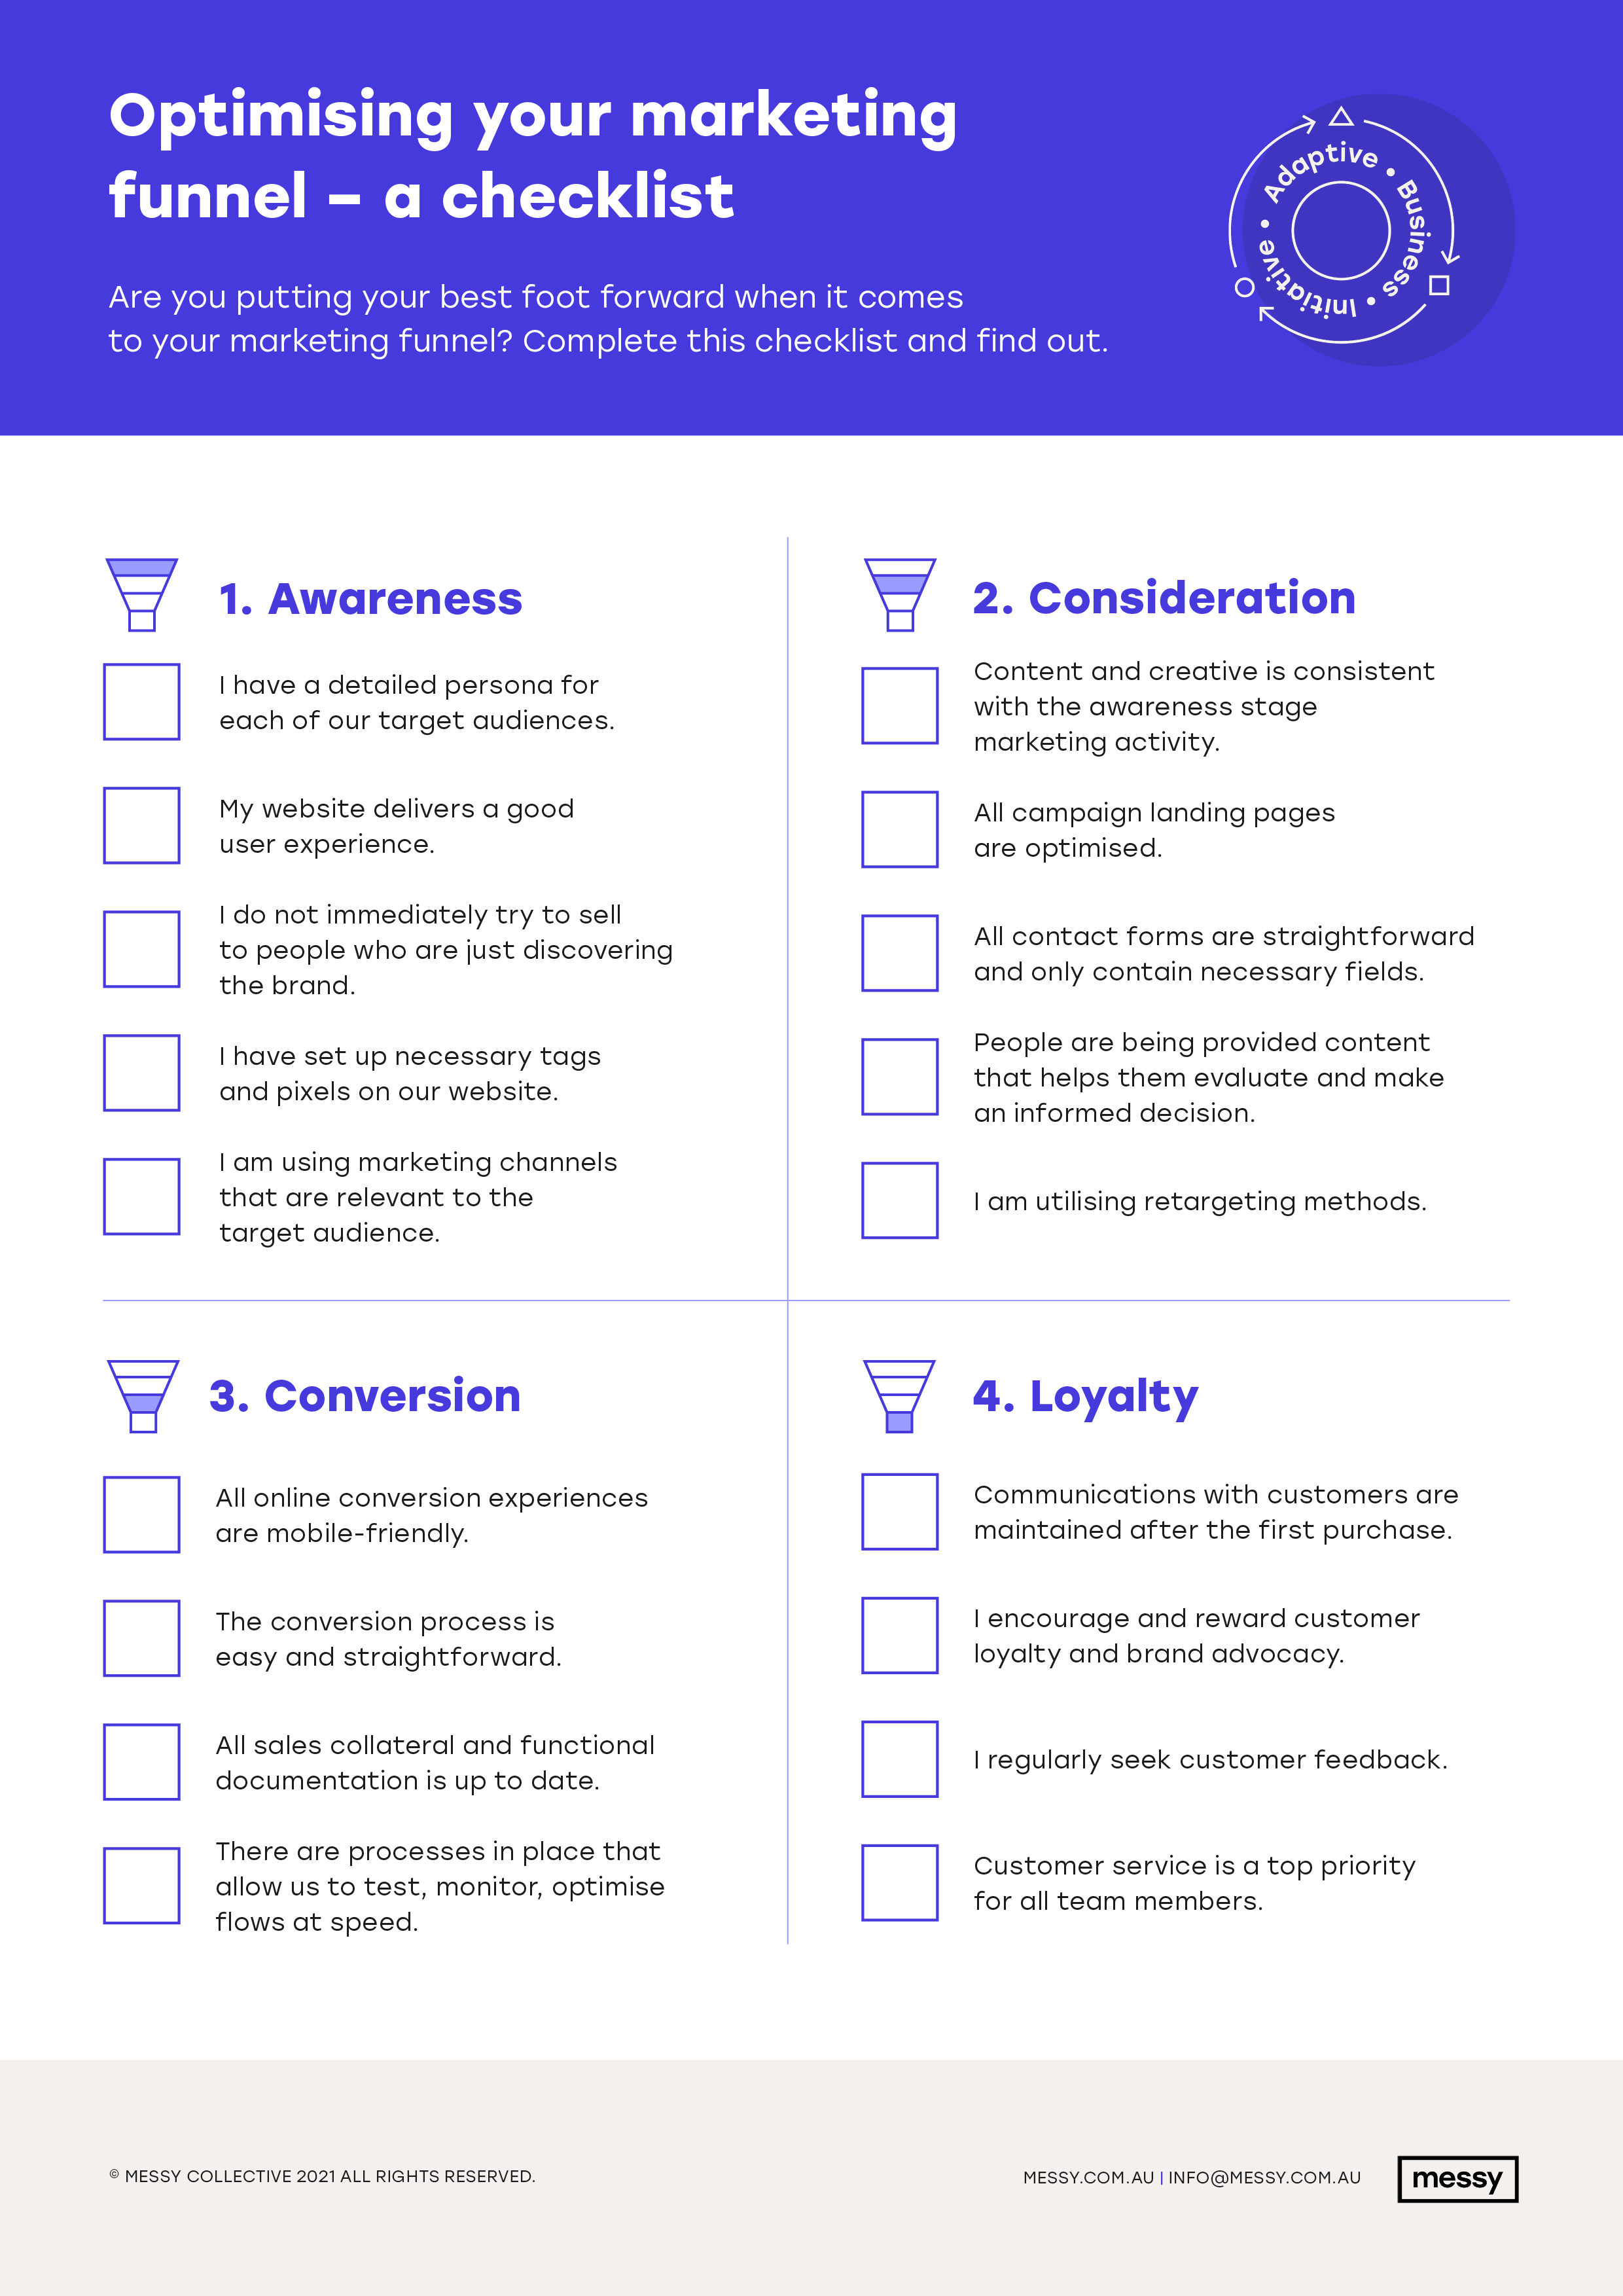 Optimising your marketing funnel checklist